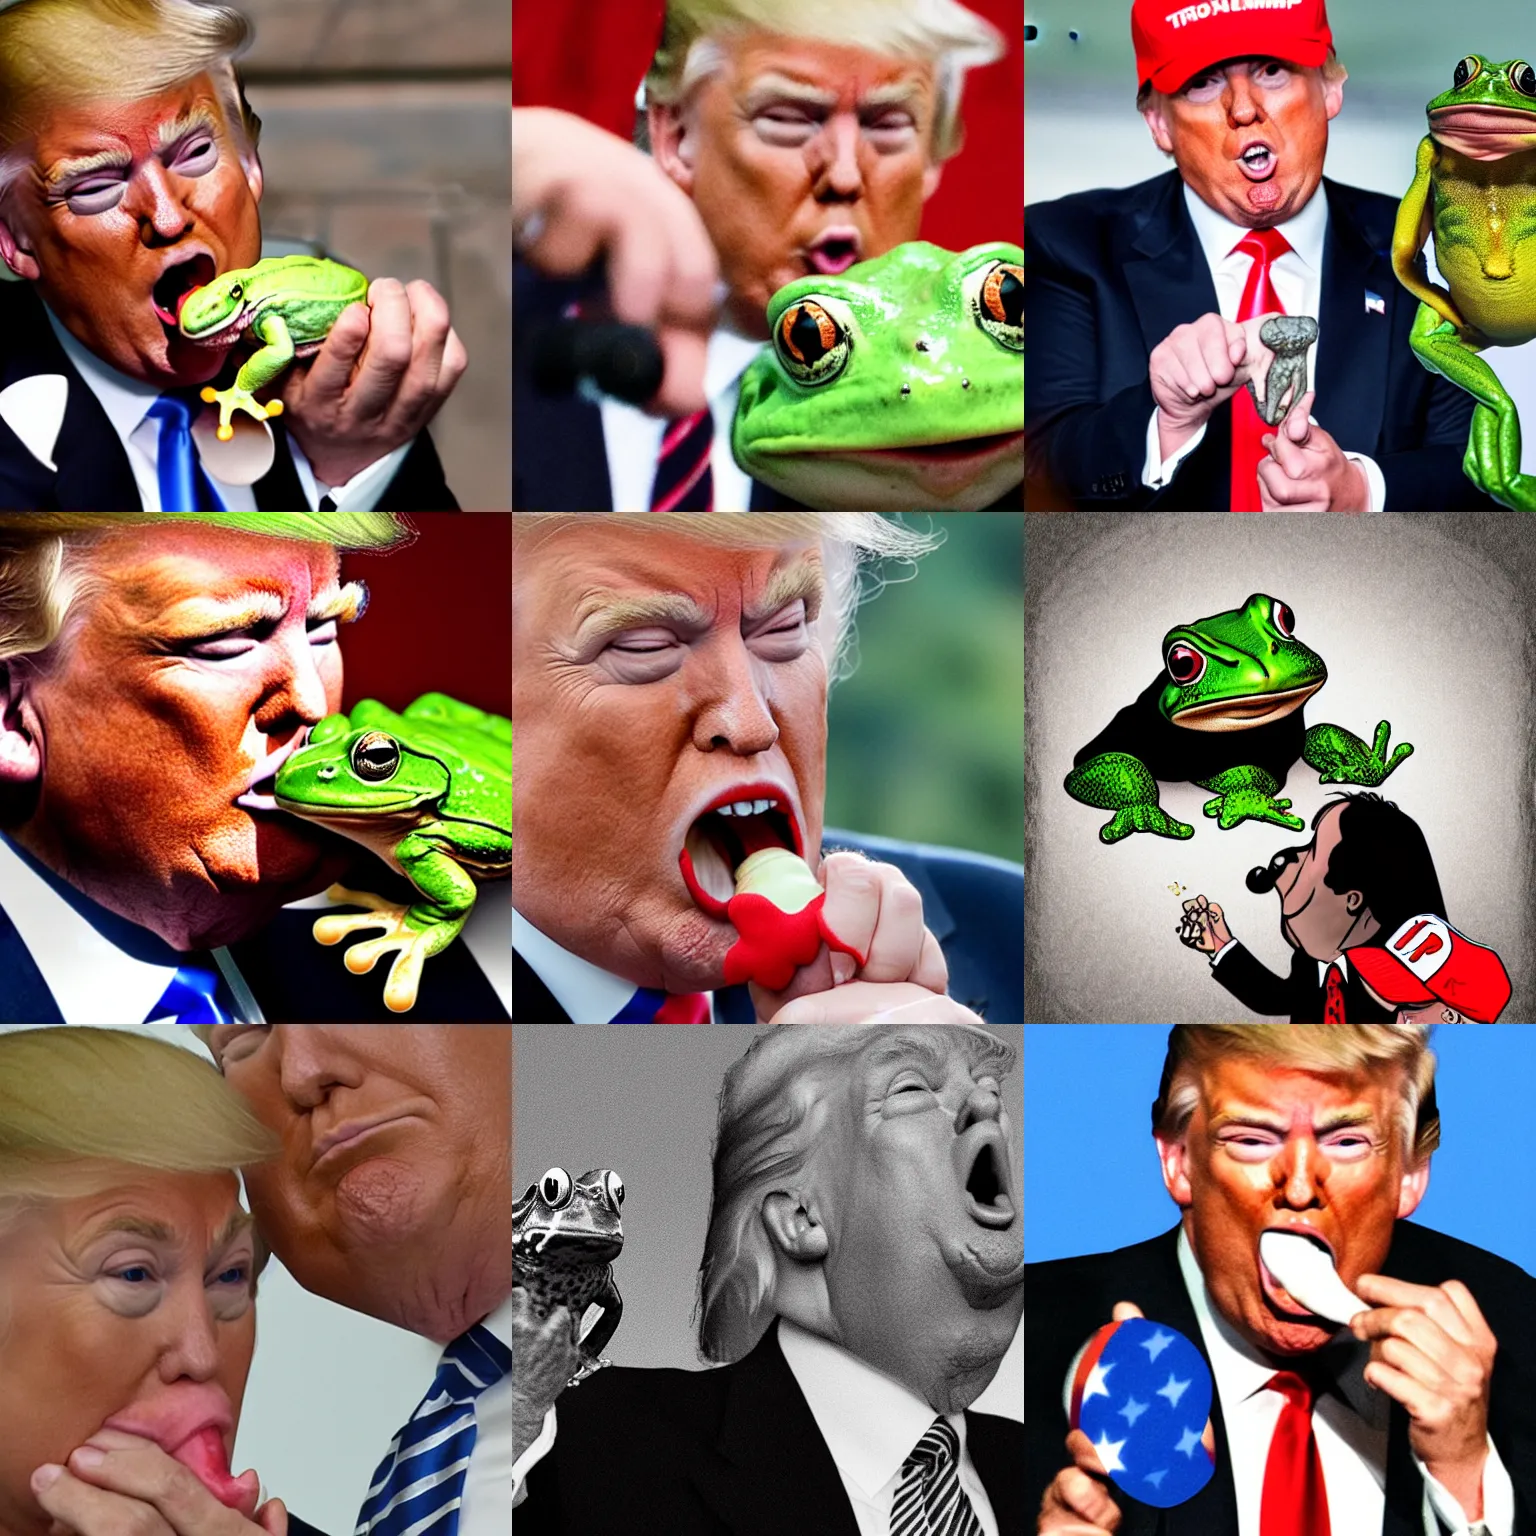 Prompt: donald trump licking a frog